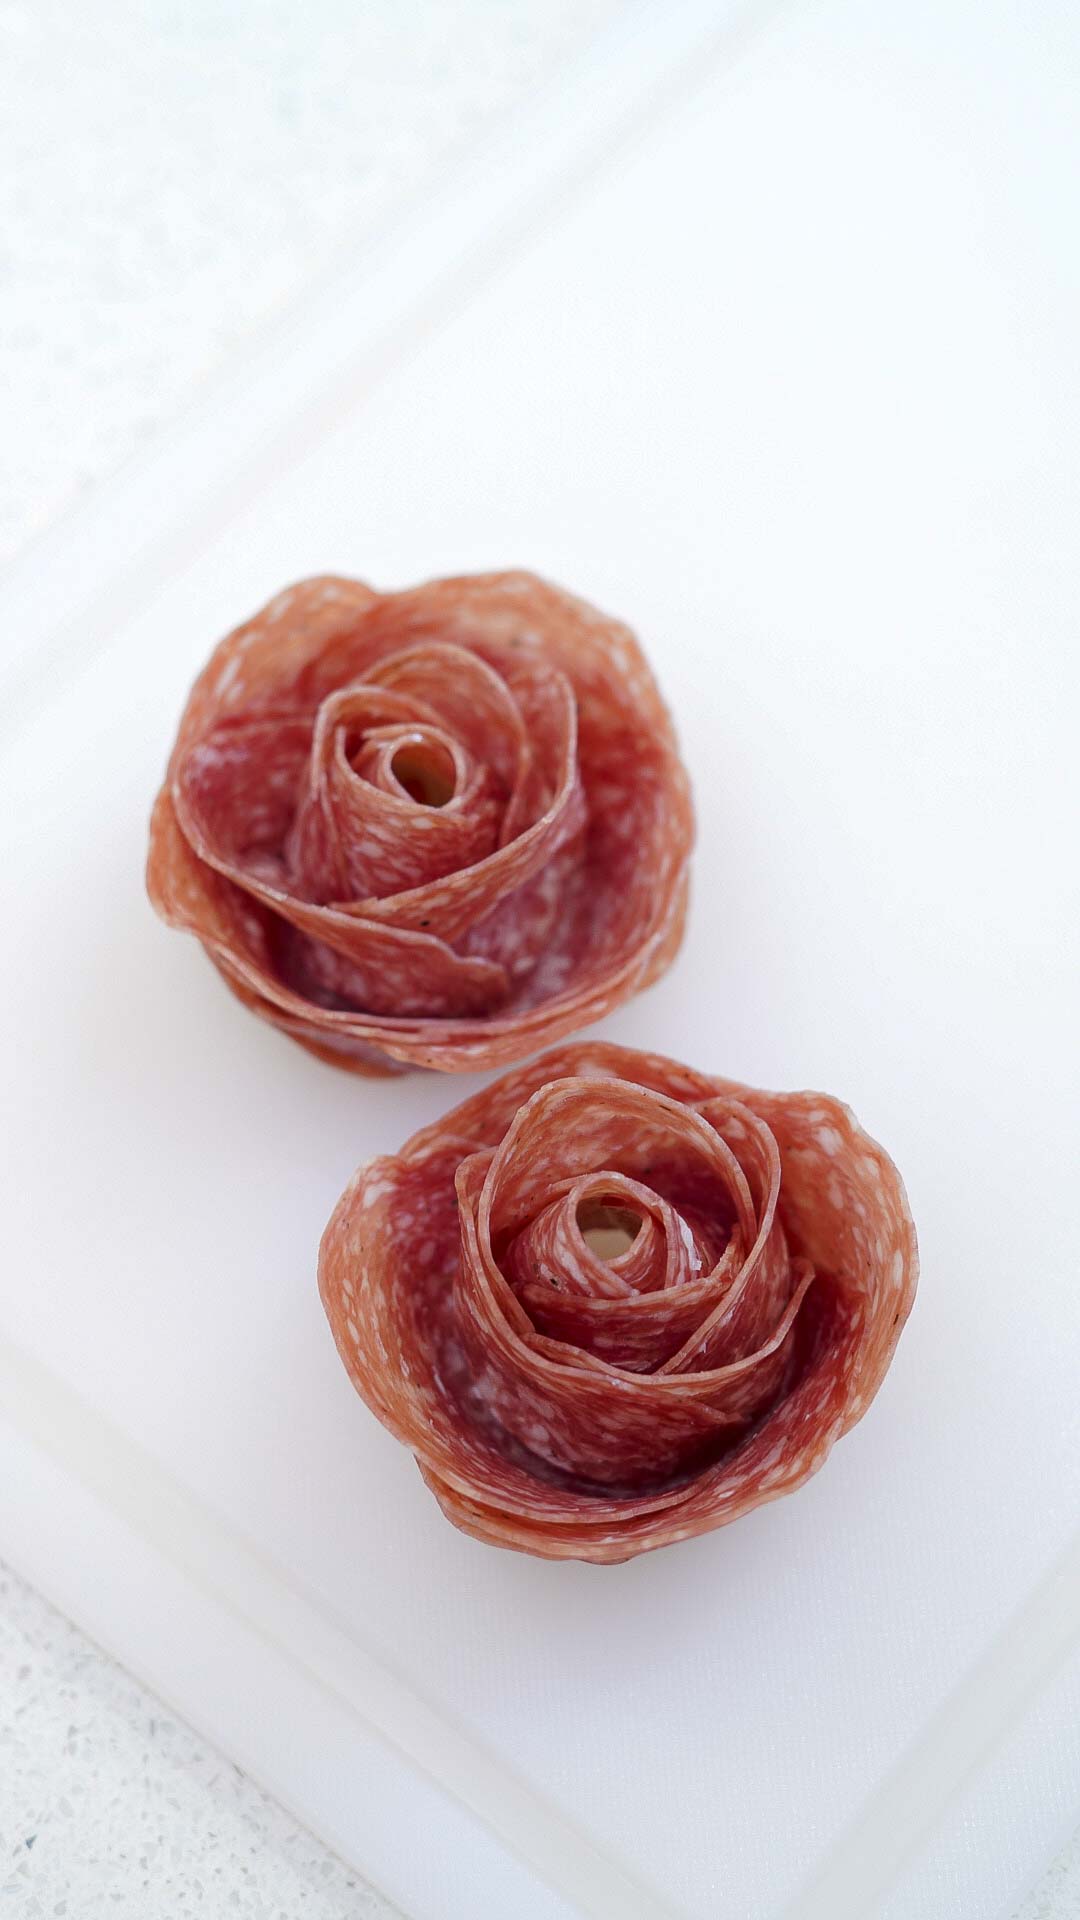 How to make a salami rose